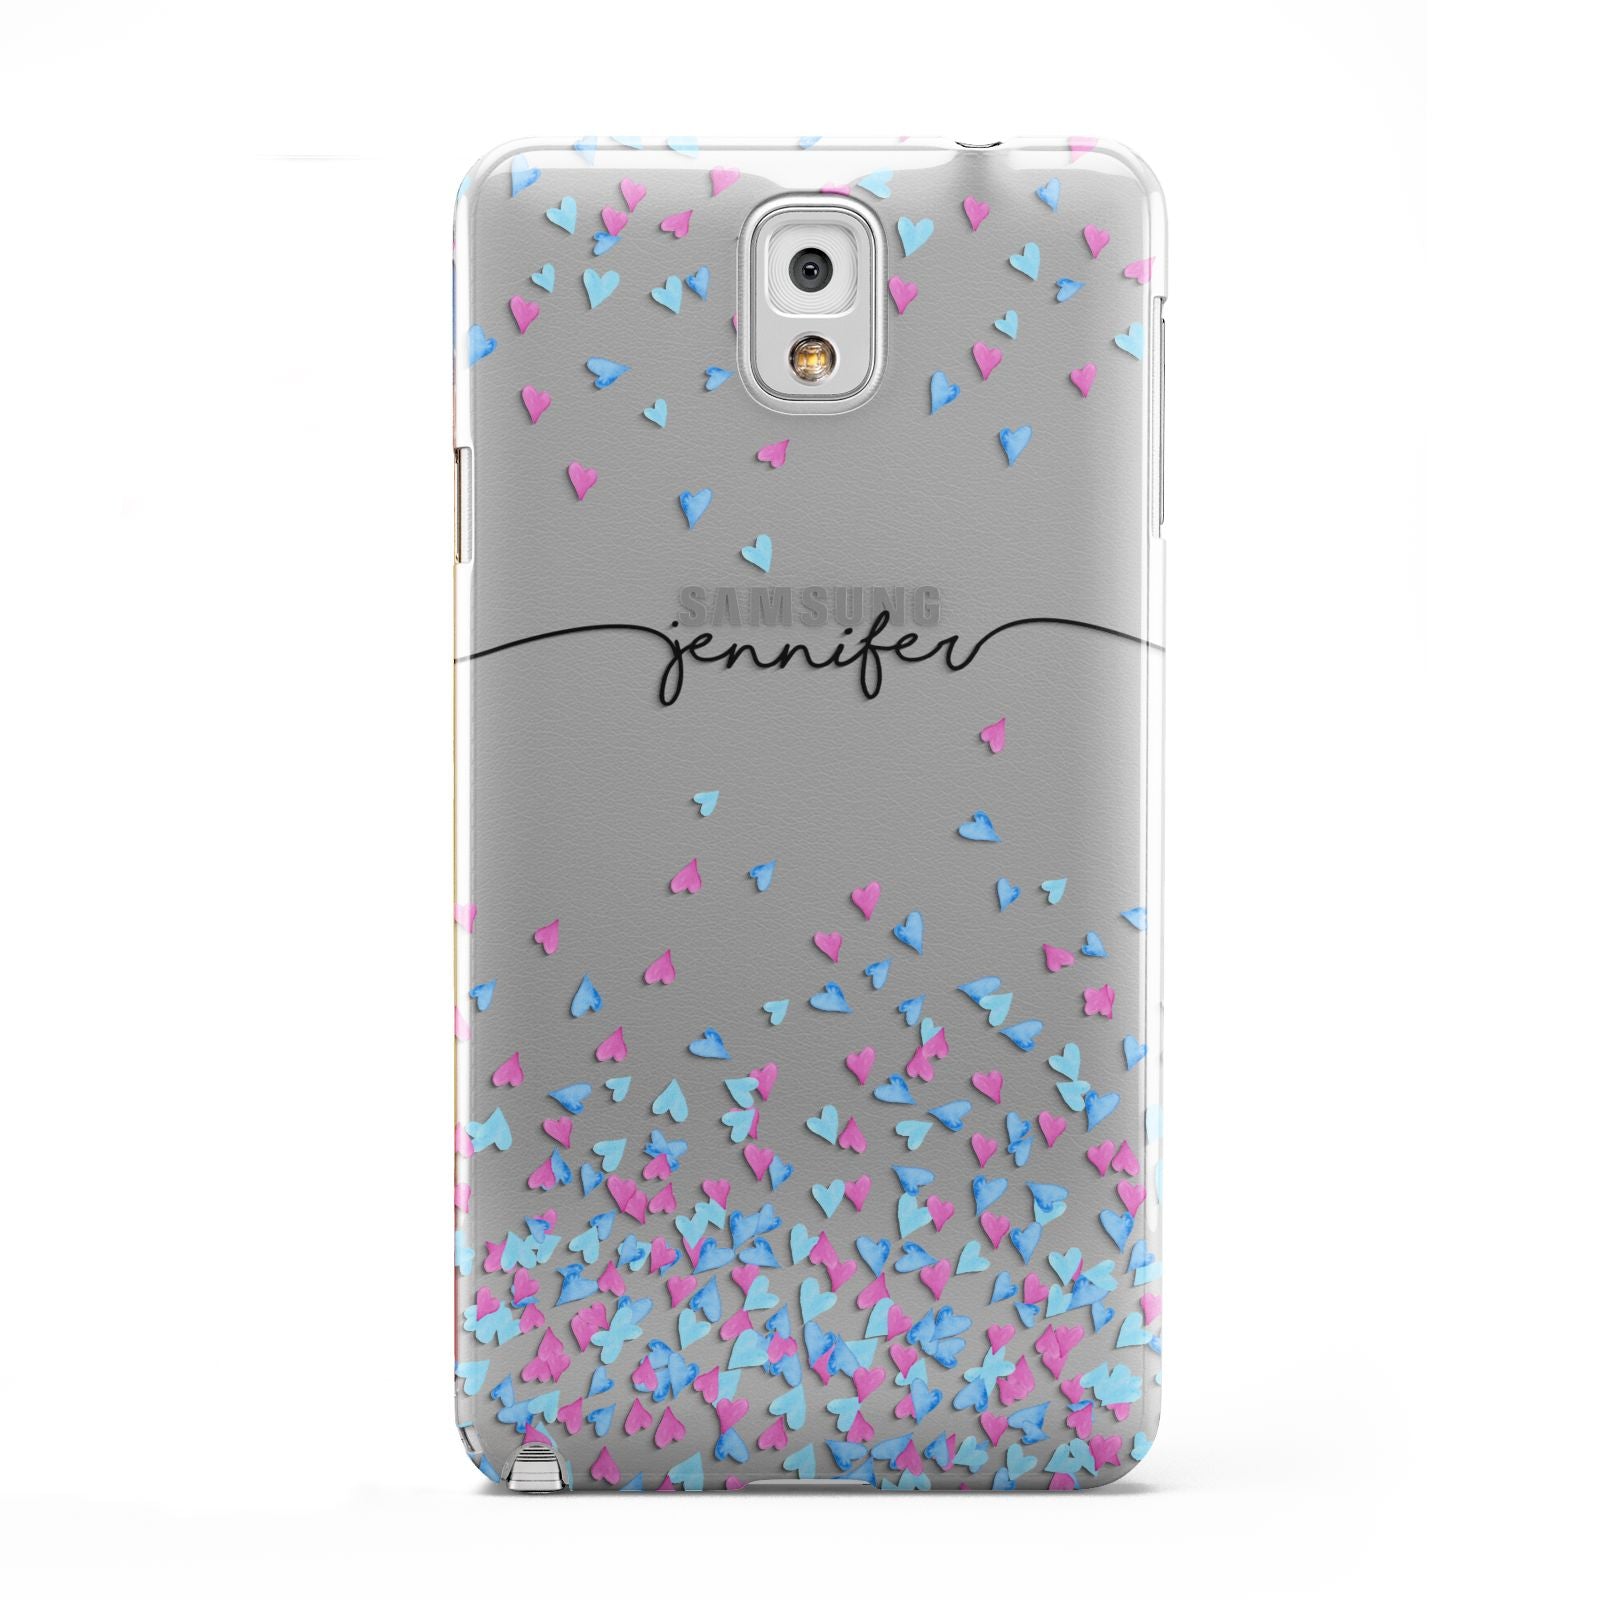 Personalised Confetti Hearts Samsung Galaxy Note 3 Case